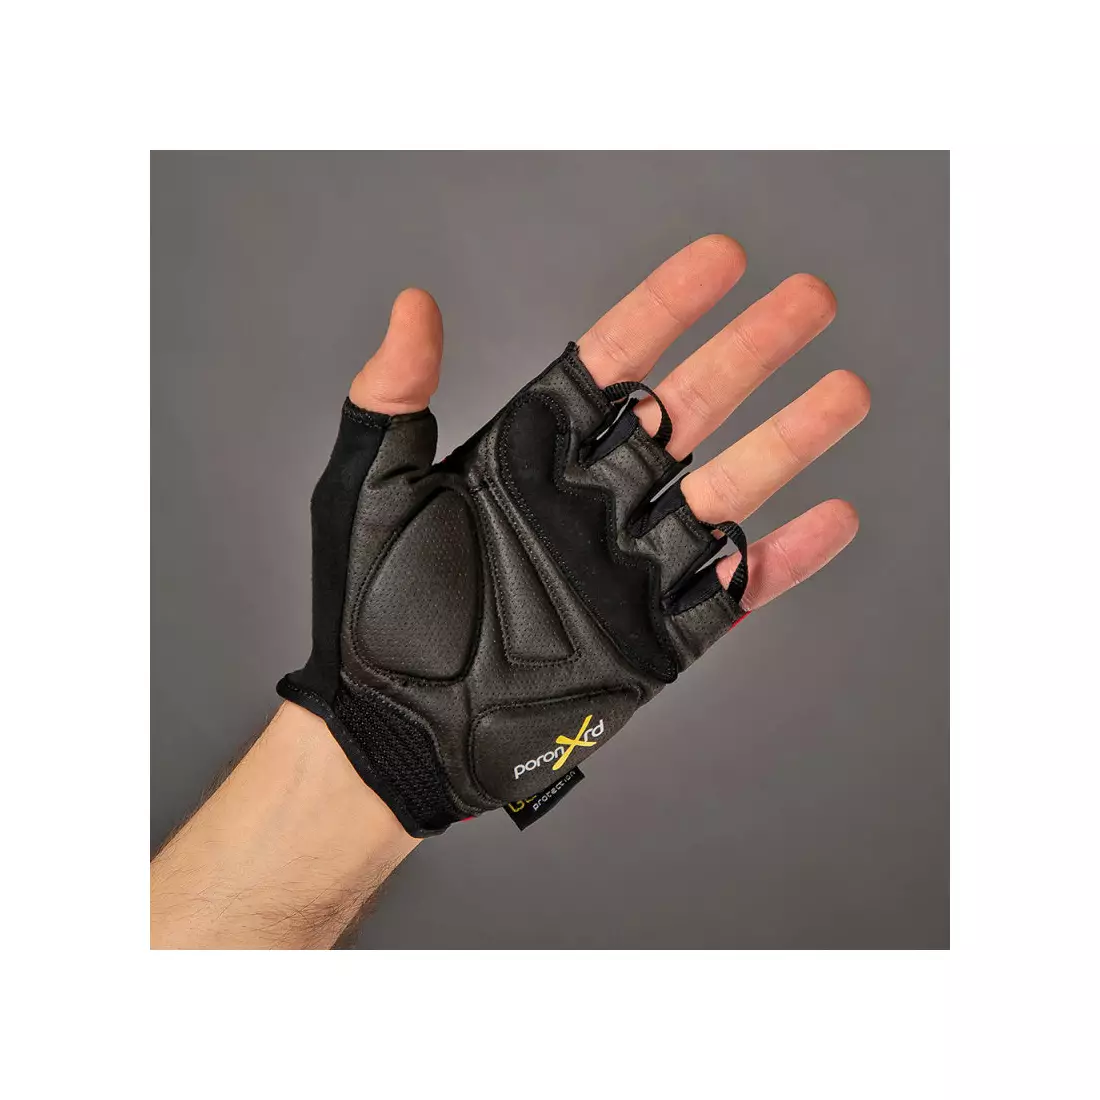 CHIBA GEL COMFORT mănuși de ciclism, negre, 3040518